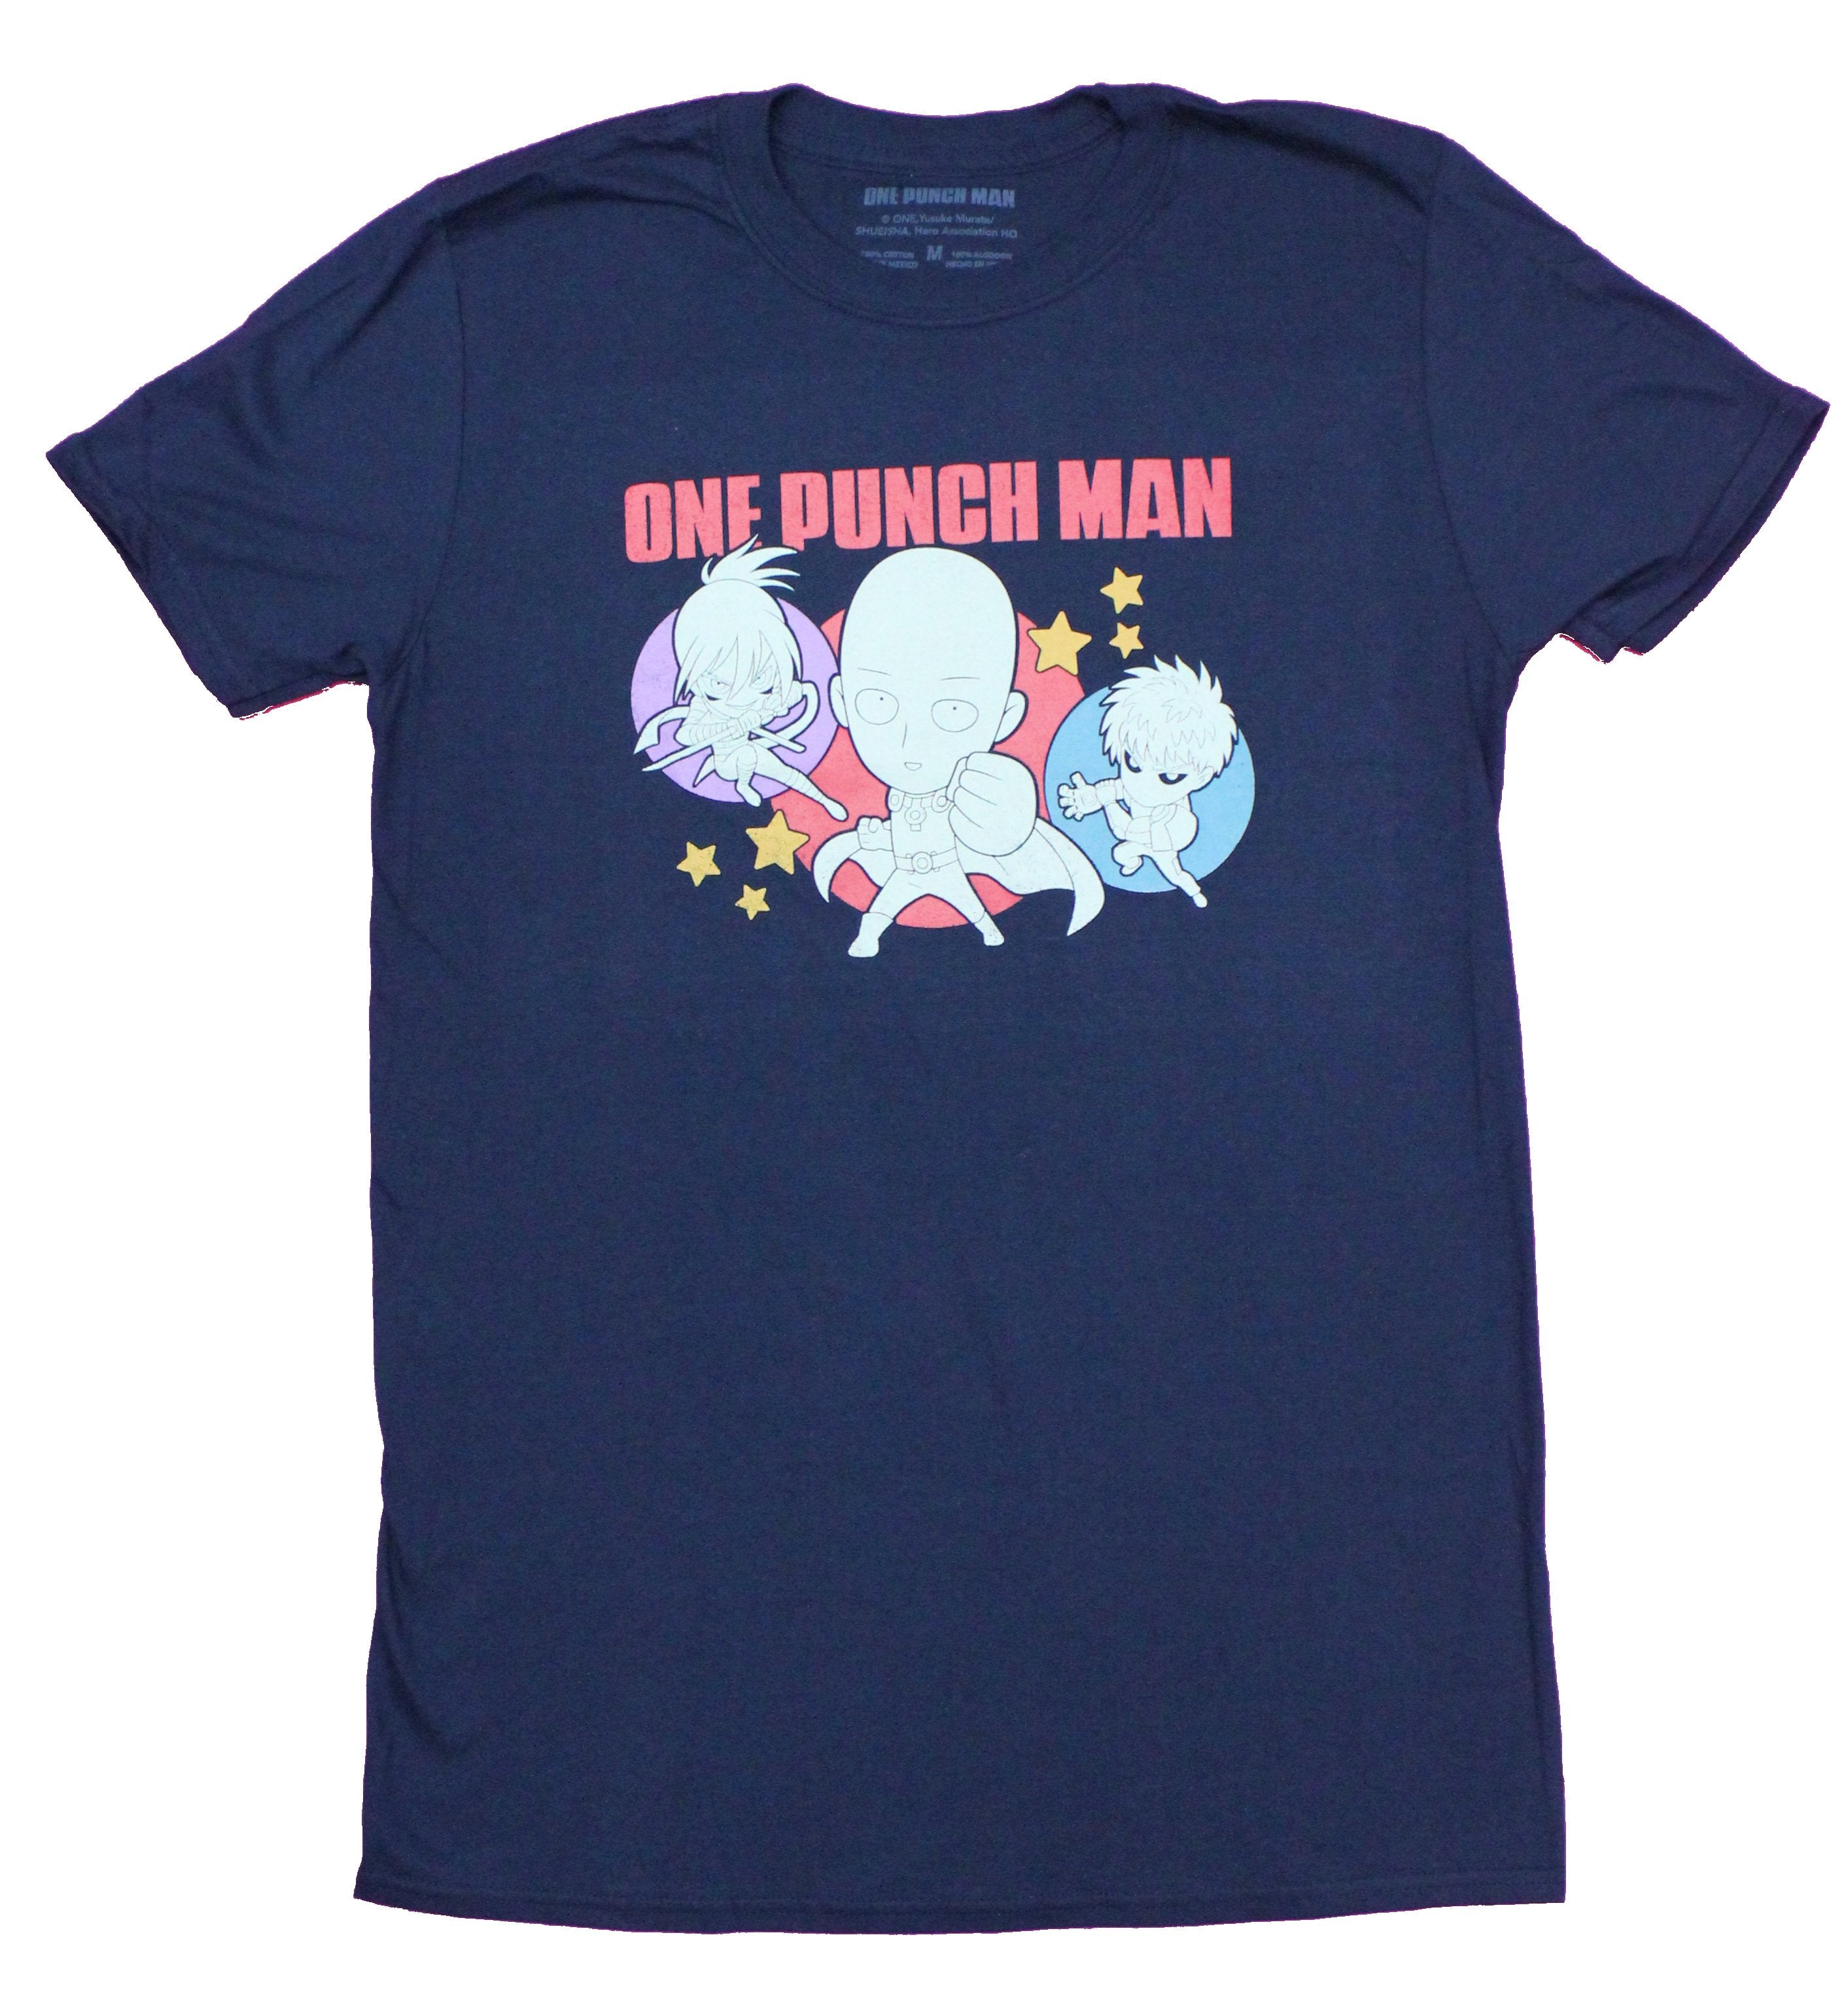 One Punch Man Mens T-Shirt -  Chibi Headed Trio Image